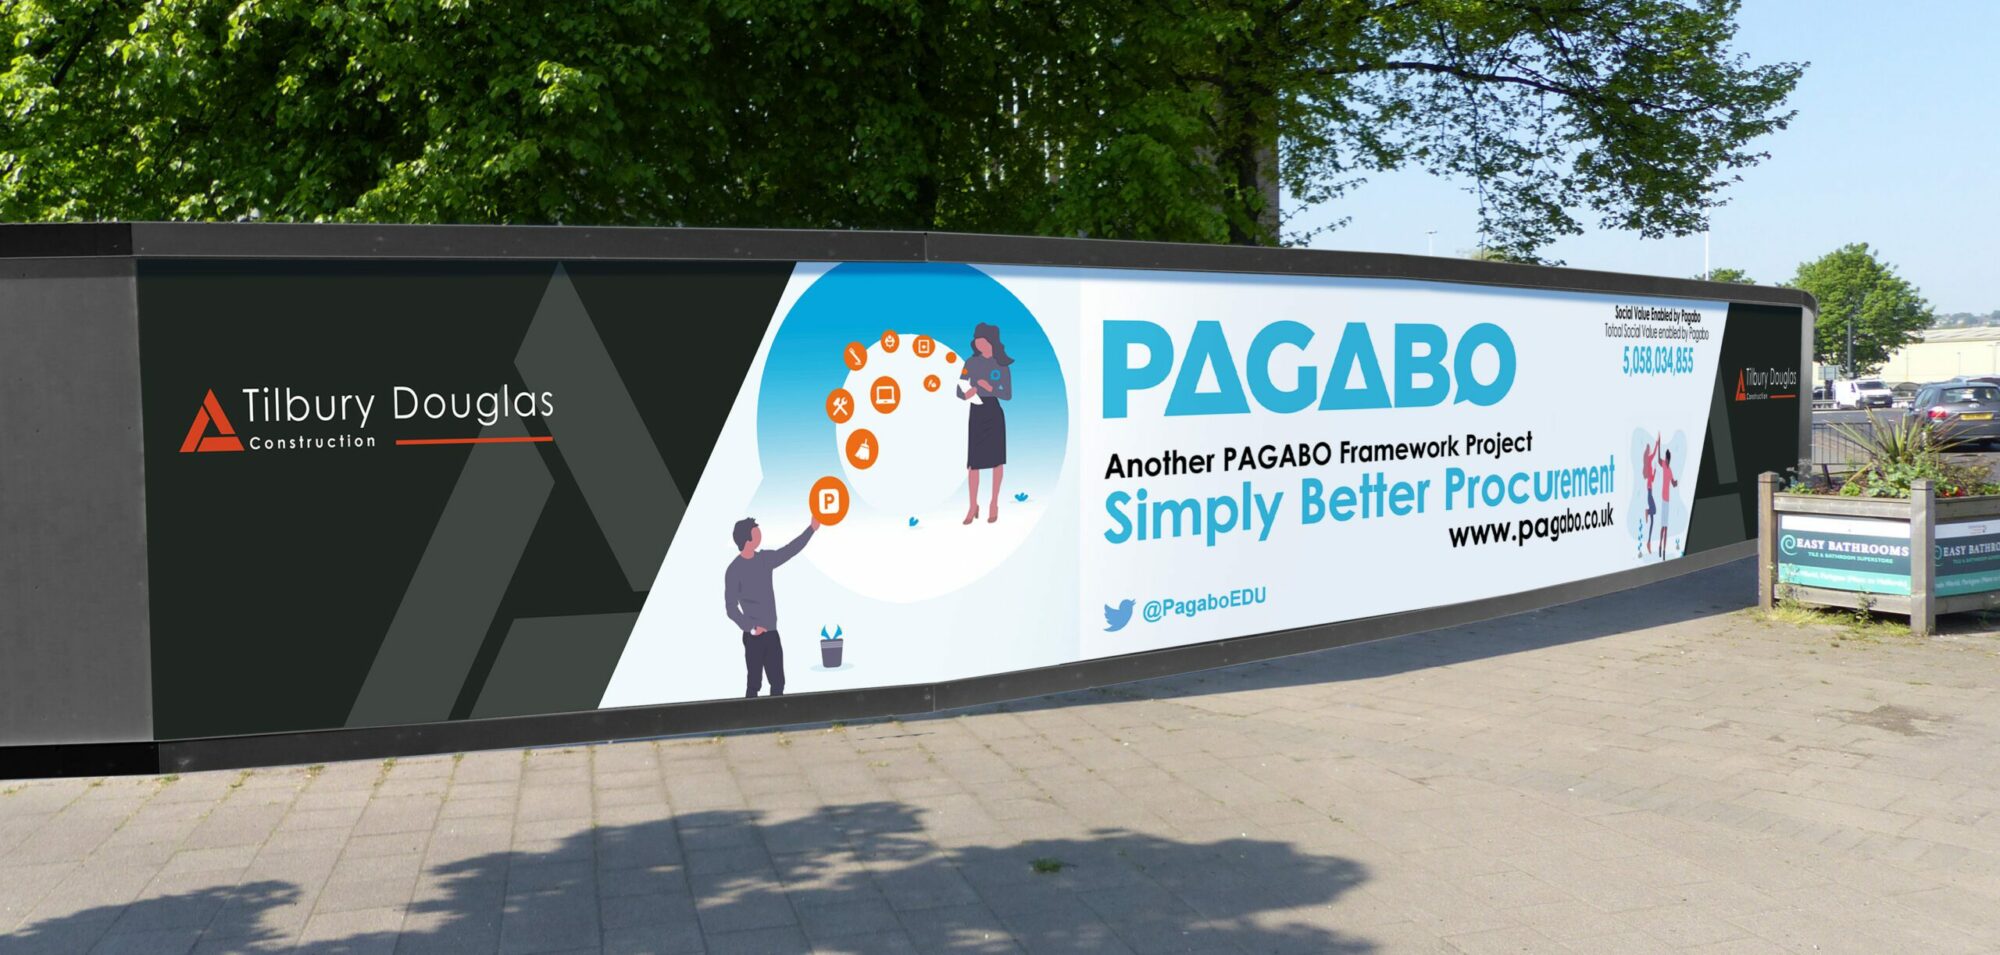 Pagabo logo on hoarding.